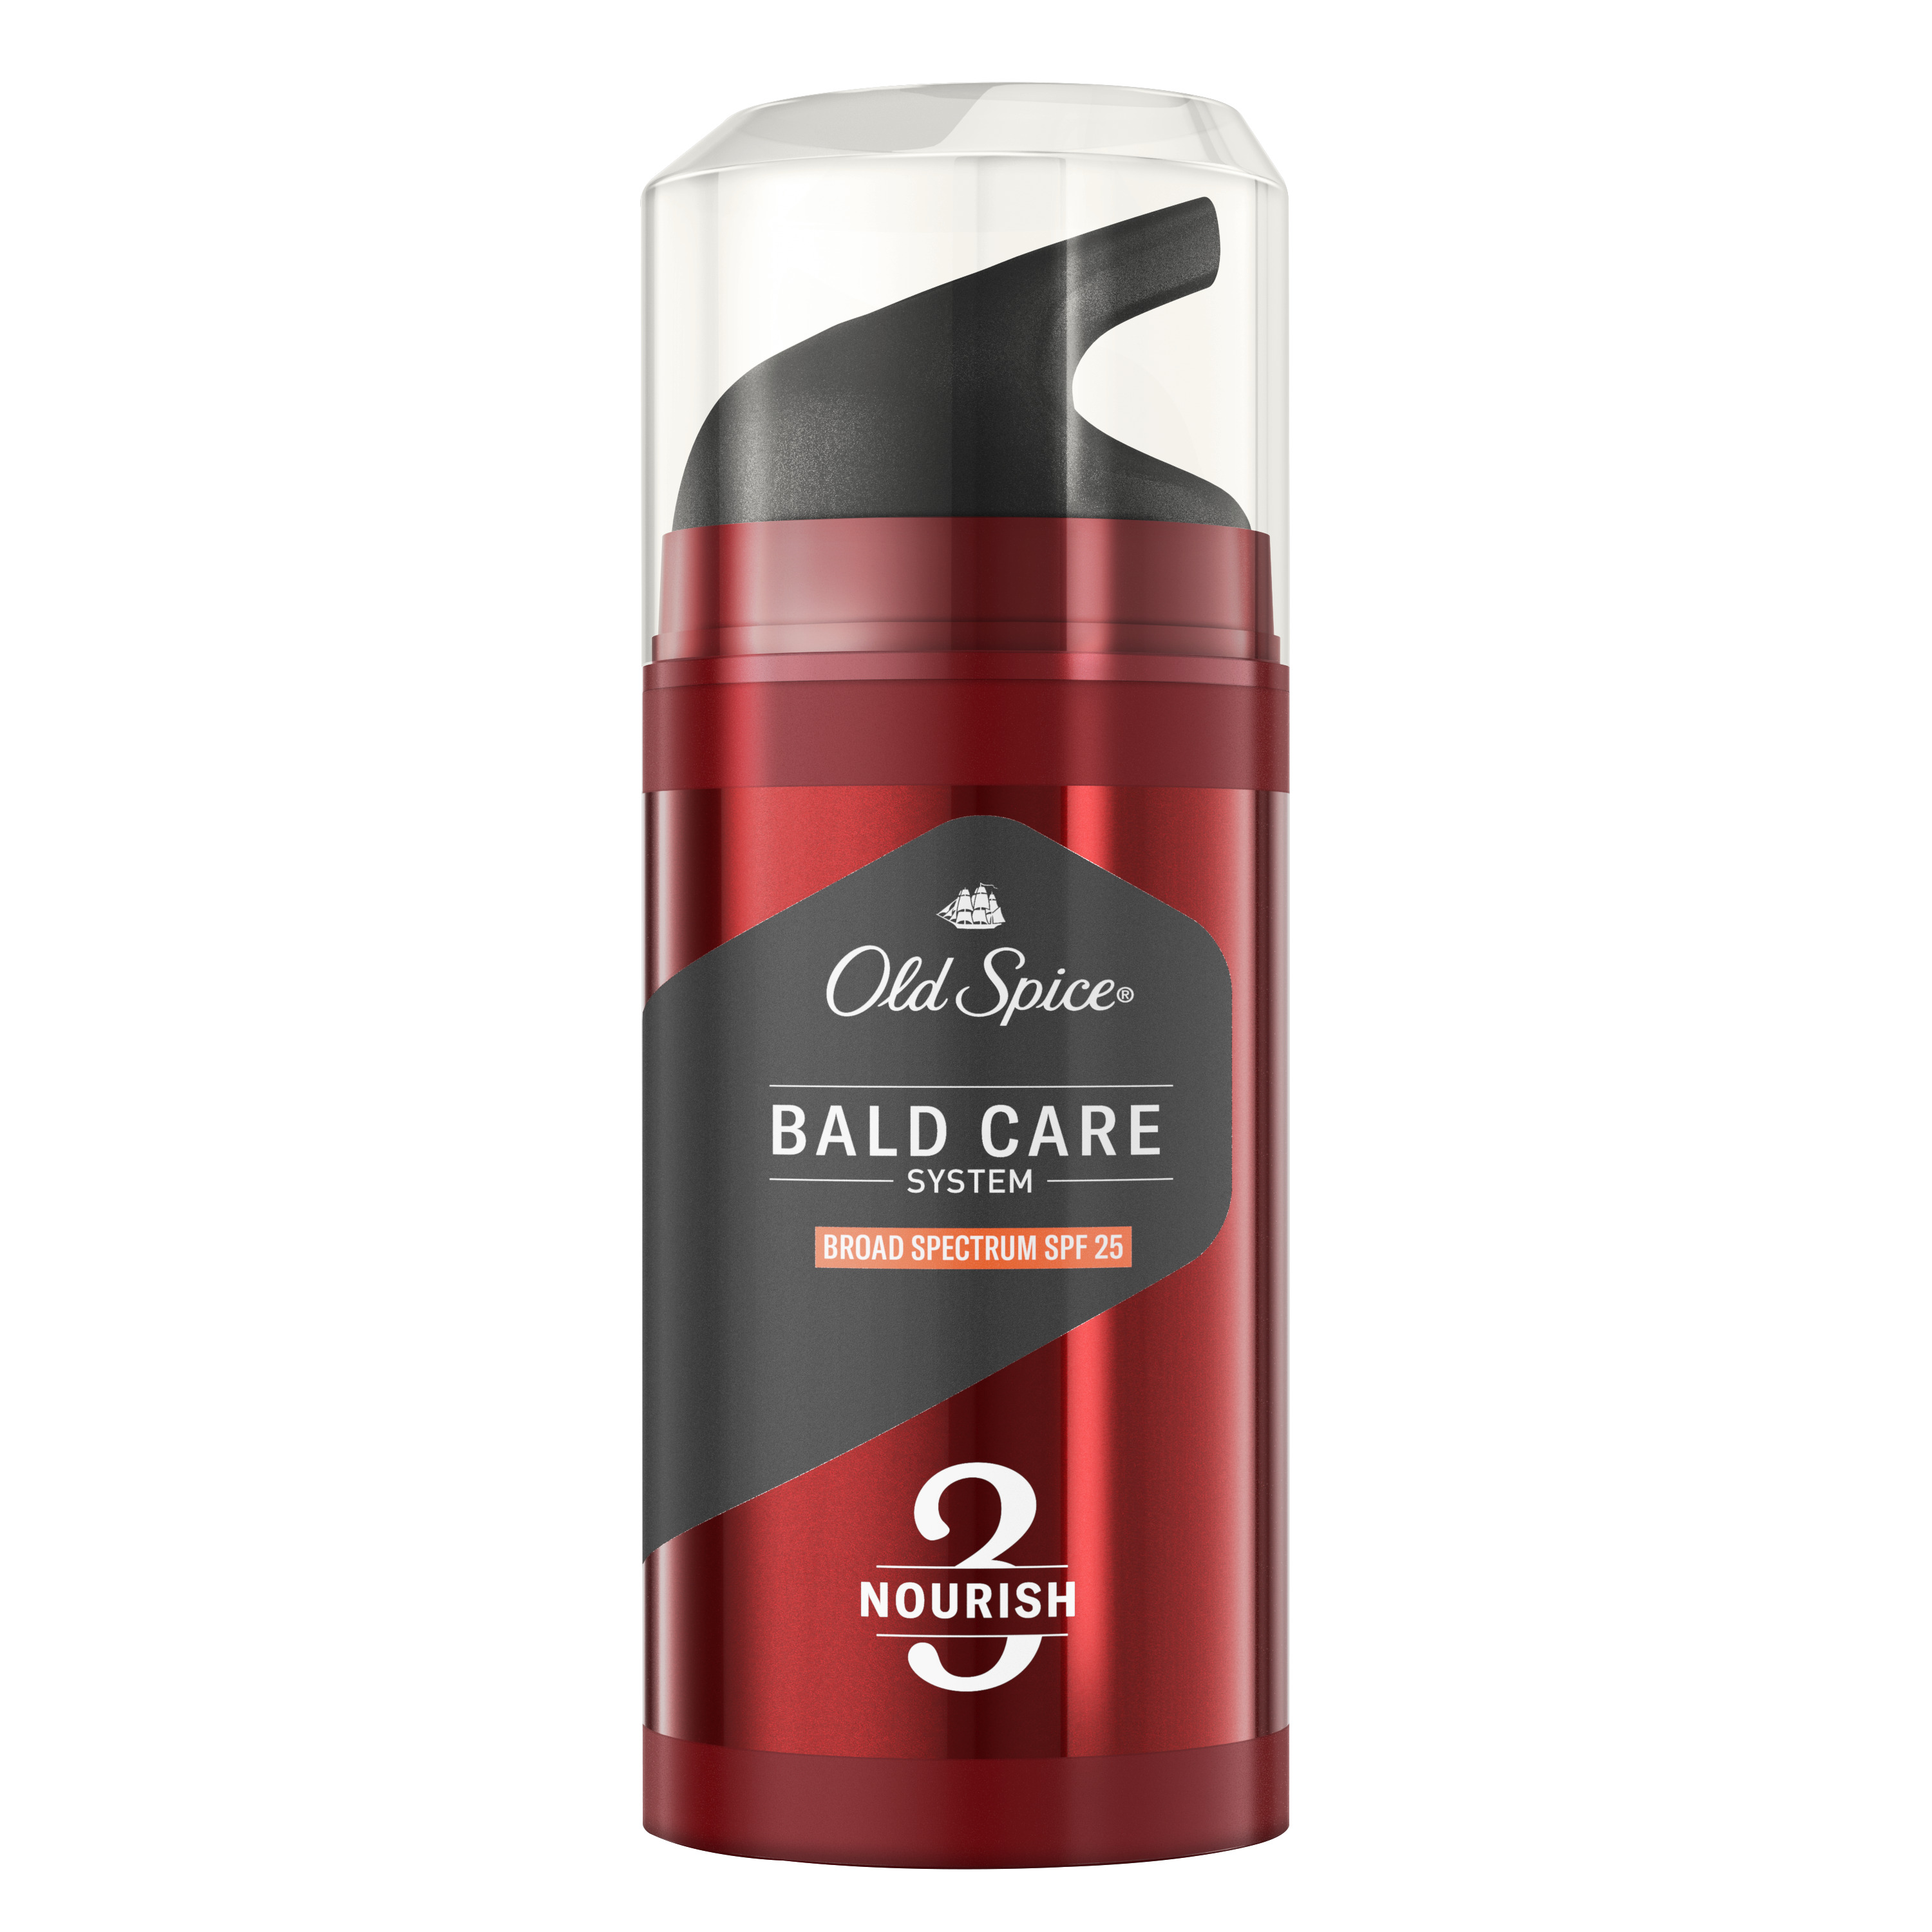 Old Spice Bald Care System Scalp Moisturizer with Sunscreen – Broad Spectrum SPF 25 -- 3 Nourish, 3.4 fl oz - image 1 of 10